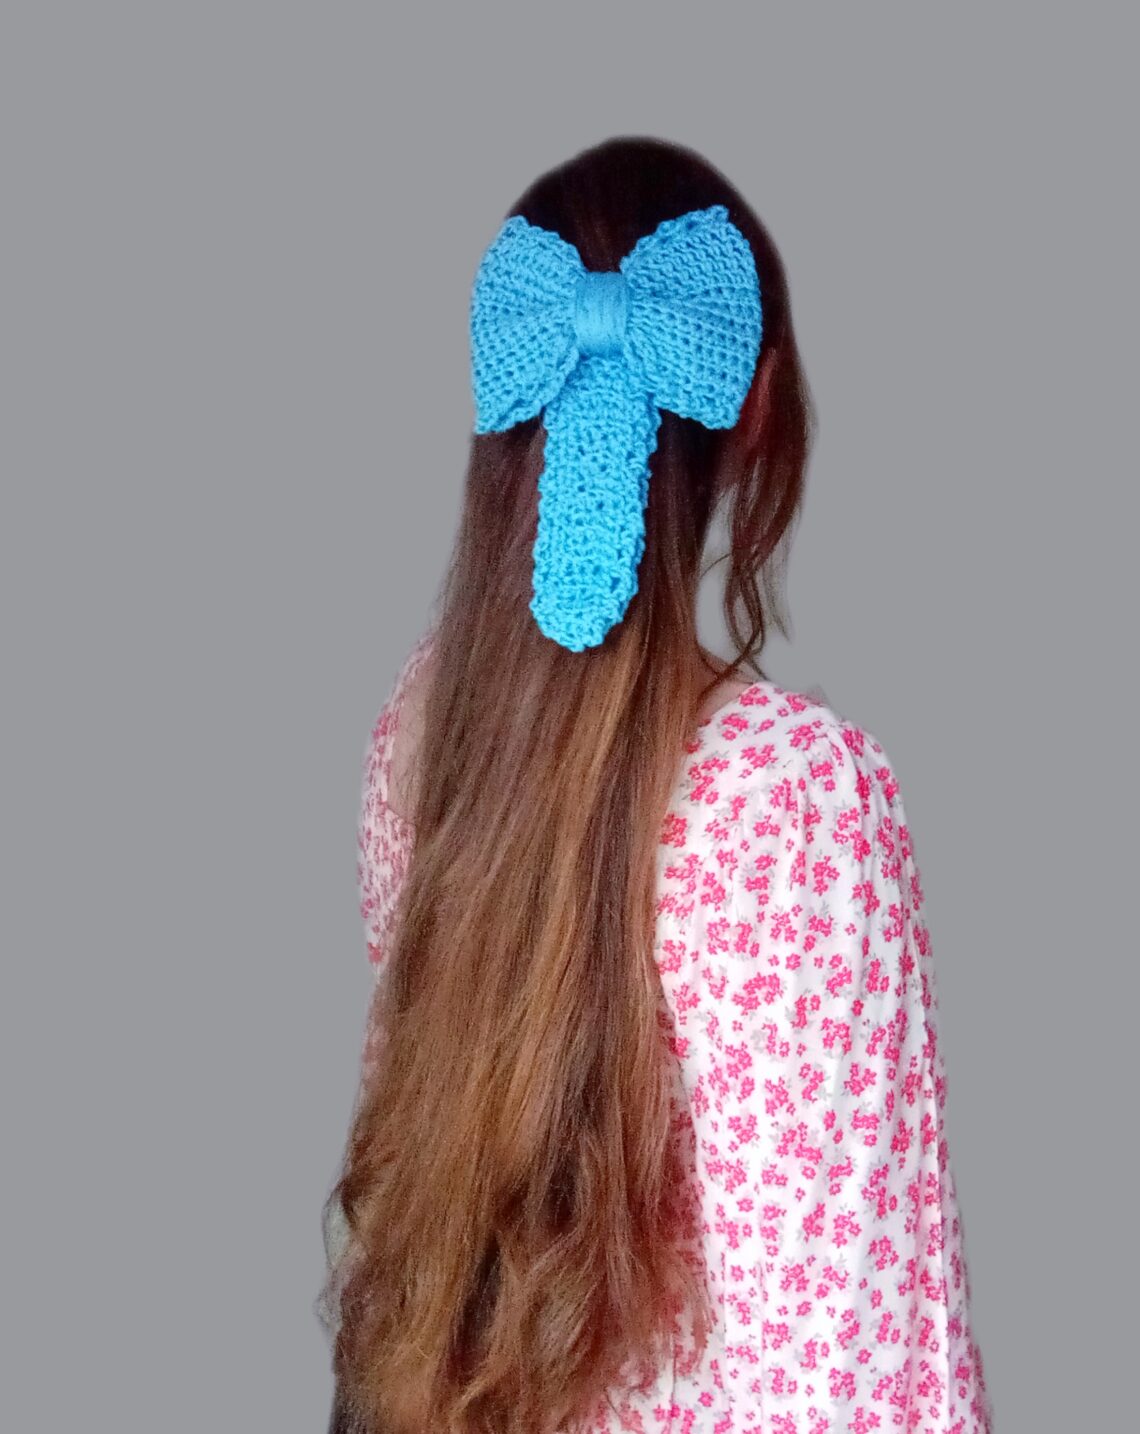 Crochet Dainty Hair Bow Free Pattern